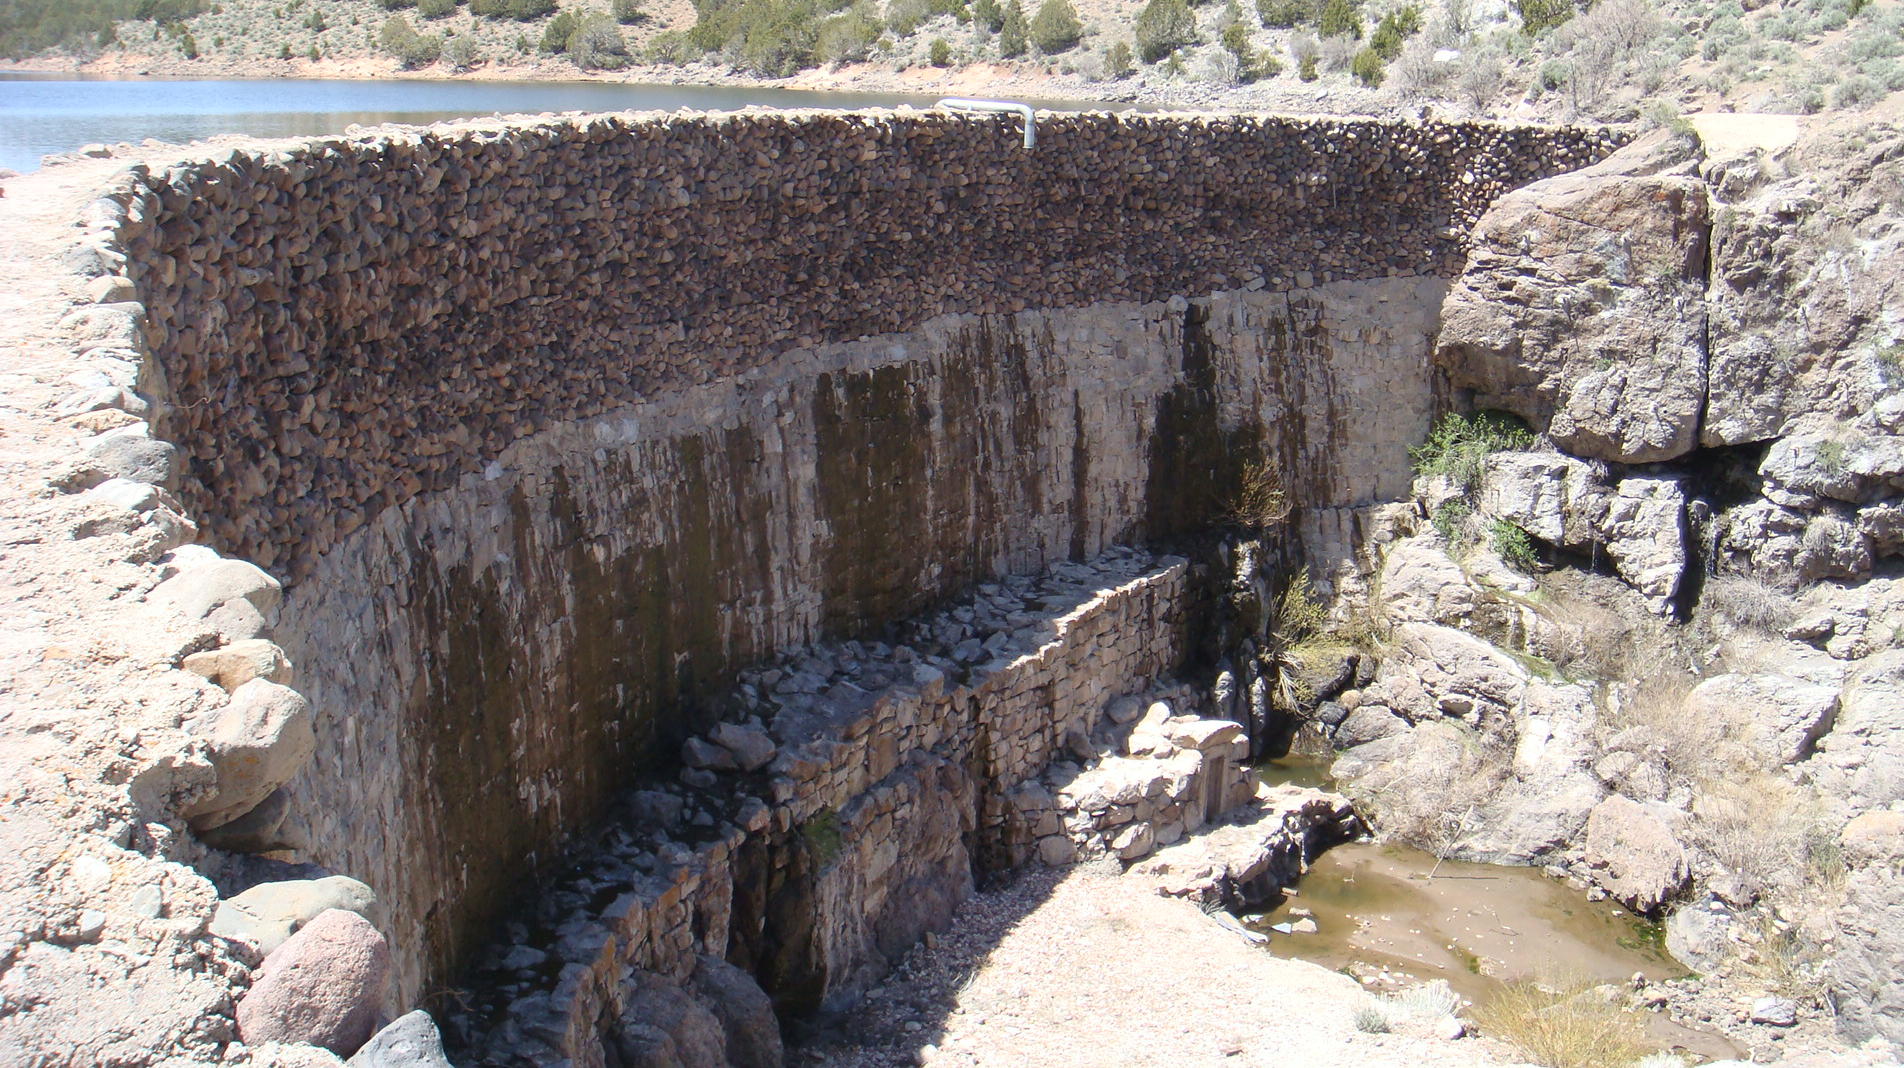 Downstream Side of the Enterprise Dam